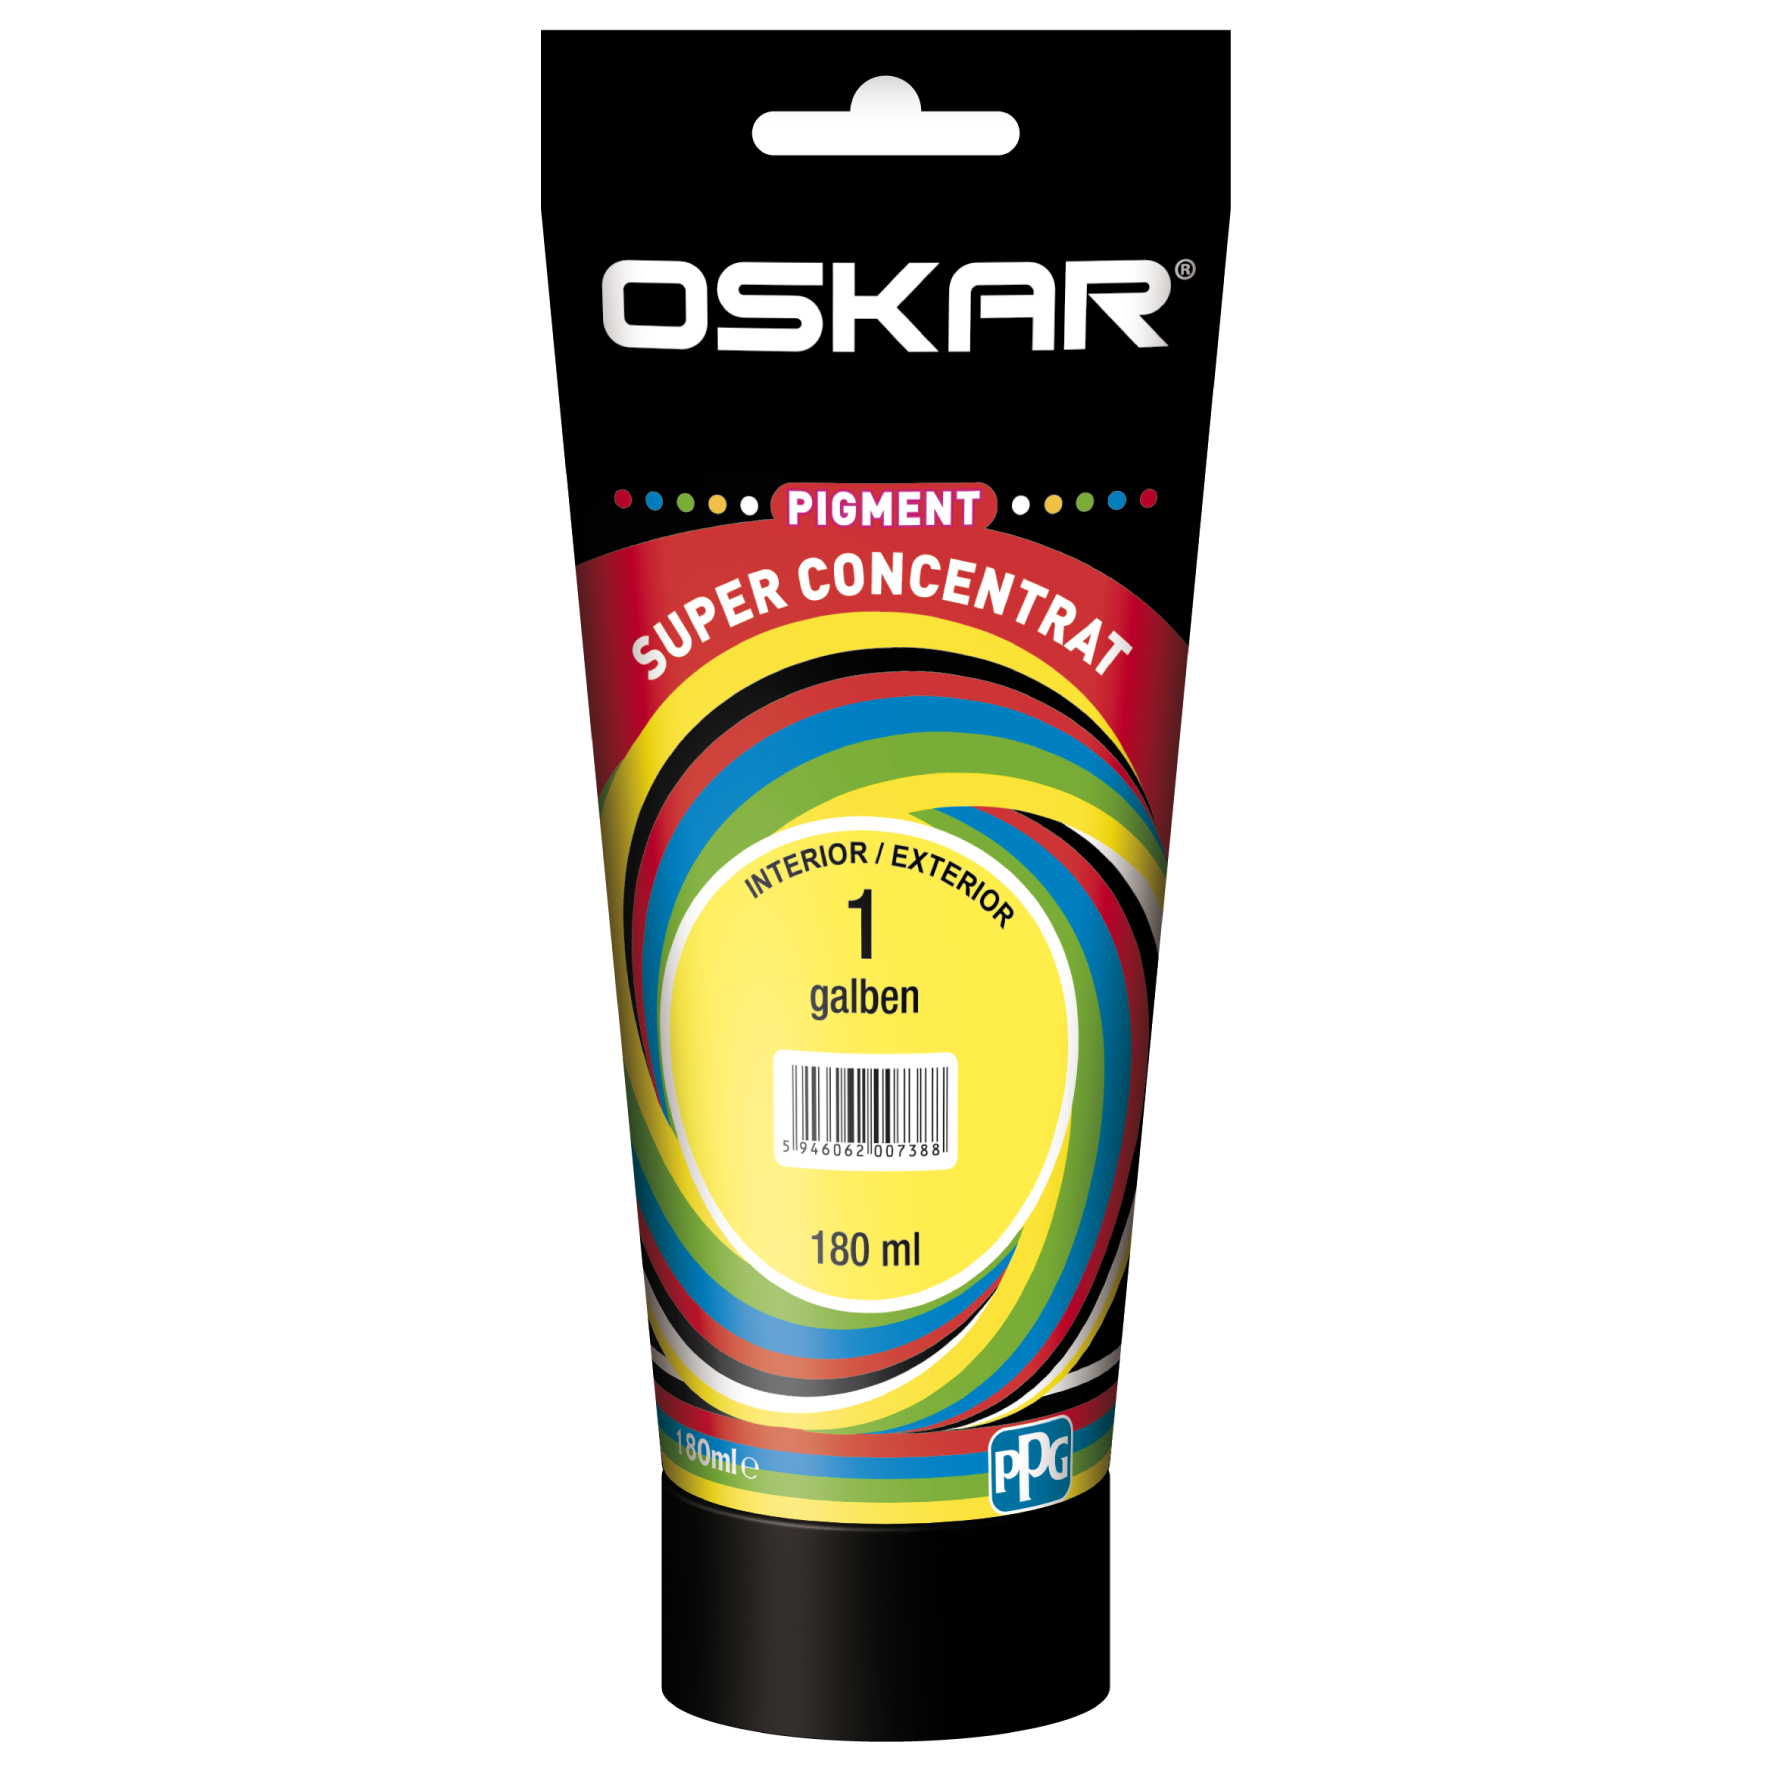 Pigment vopsea lavabila Oskar super concentrat, galben 1, 180 ml 180